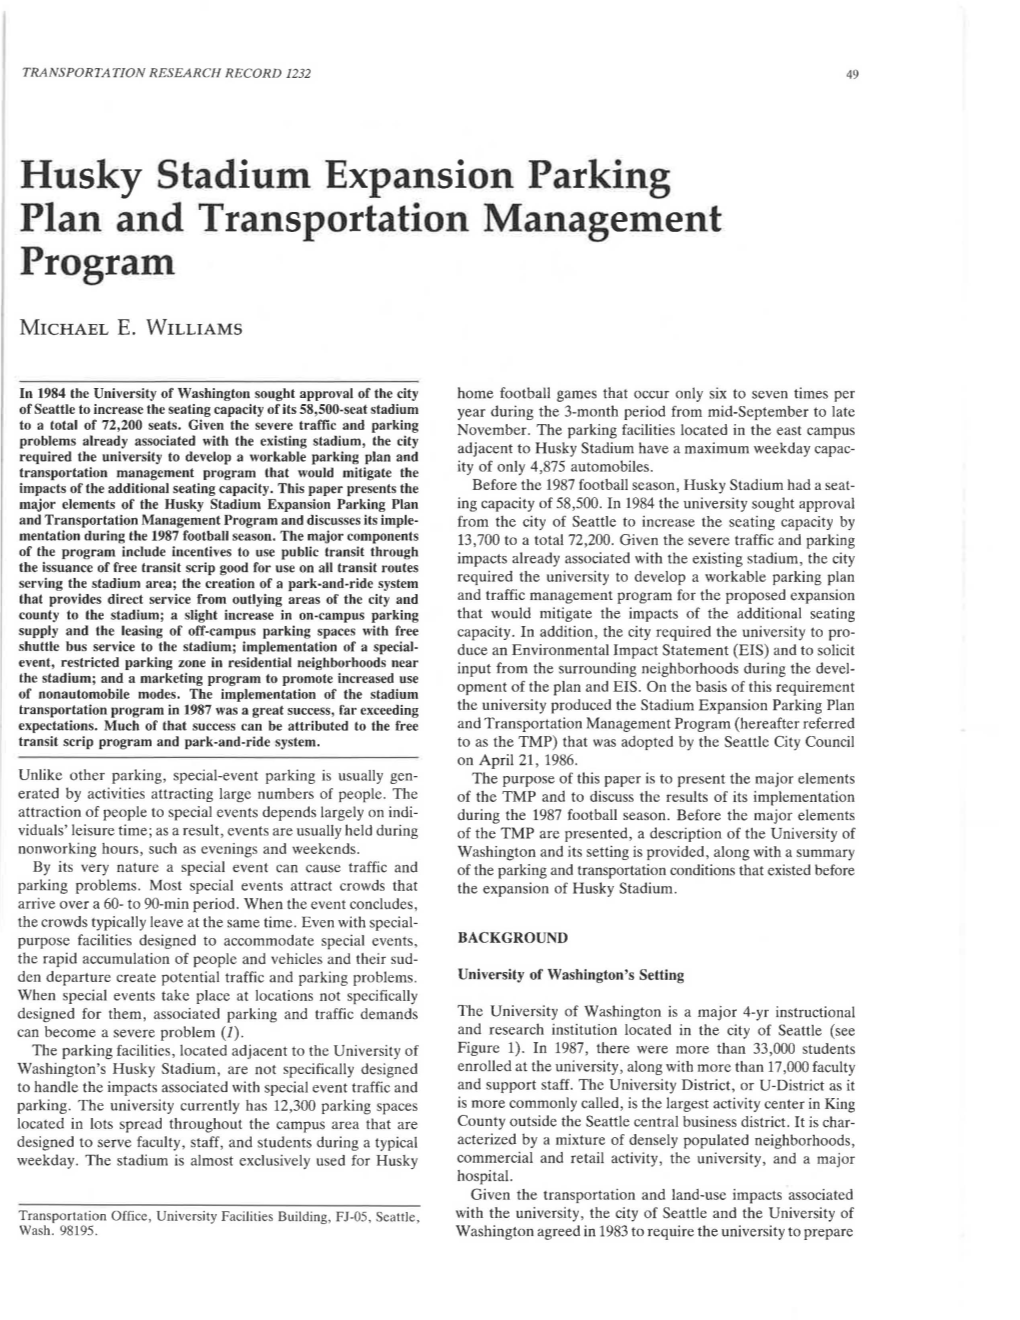 Husky Stadium Expansion Parking Plan and Transportation Management Program